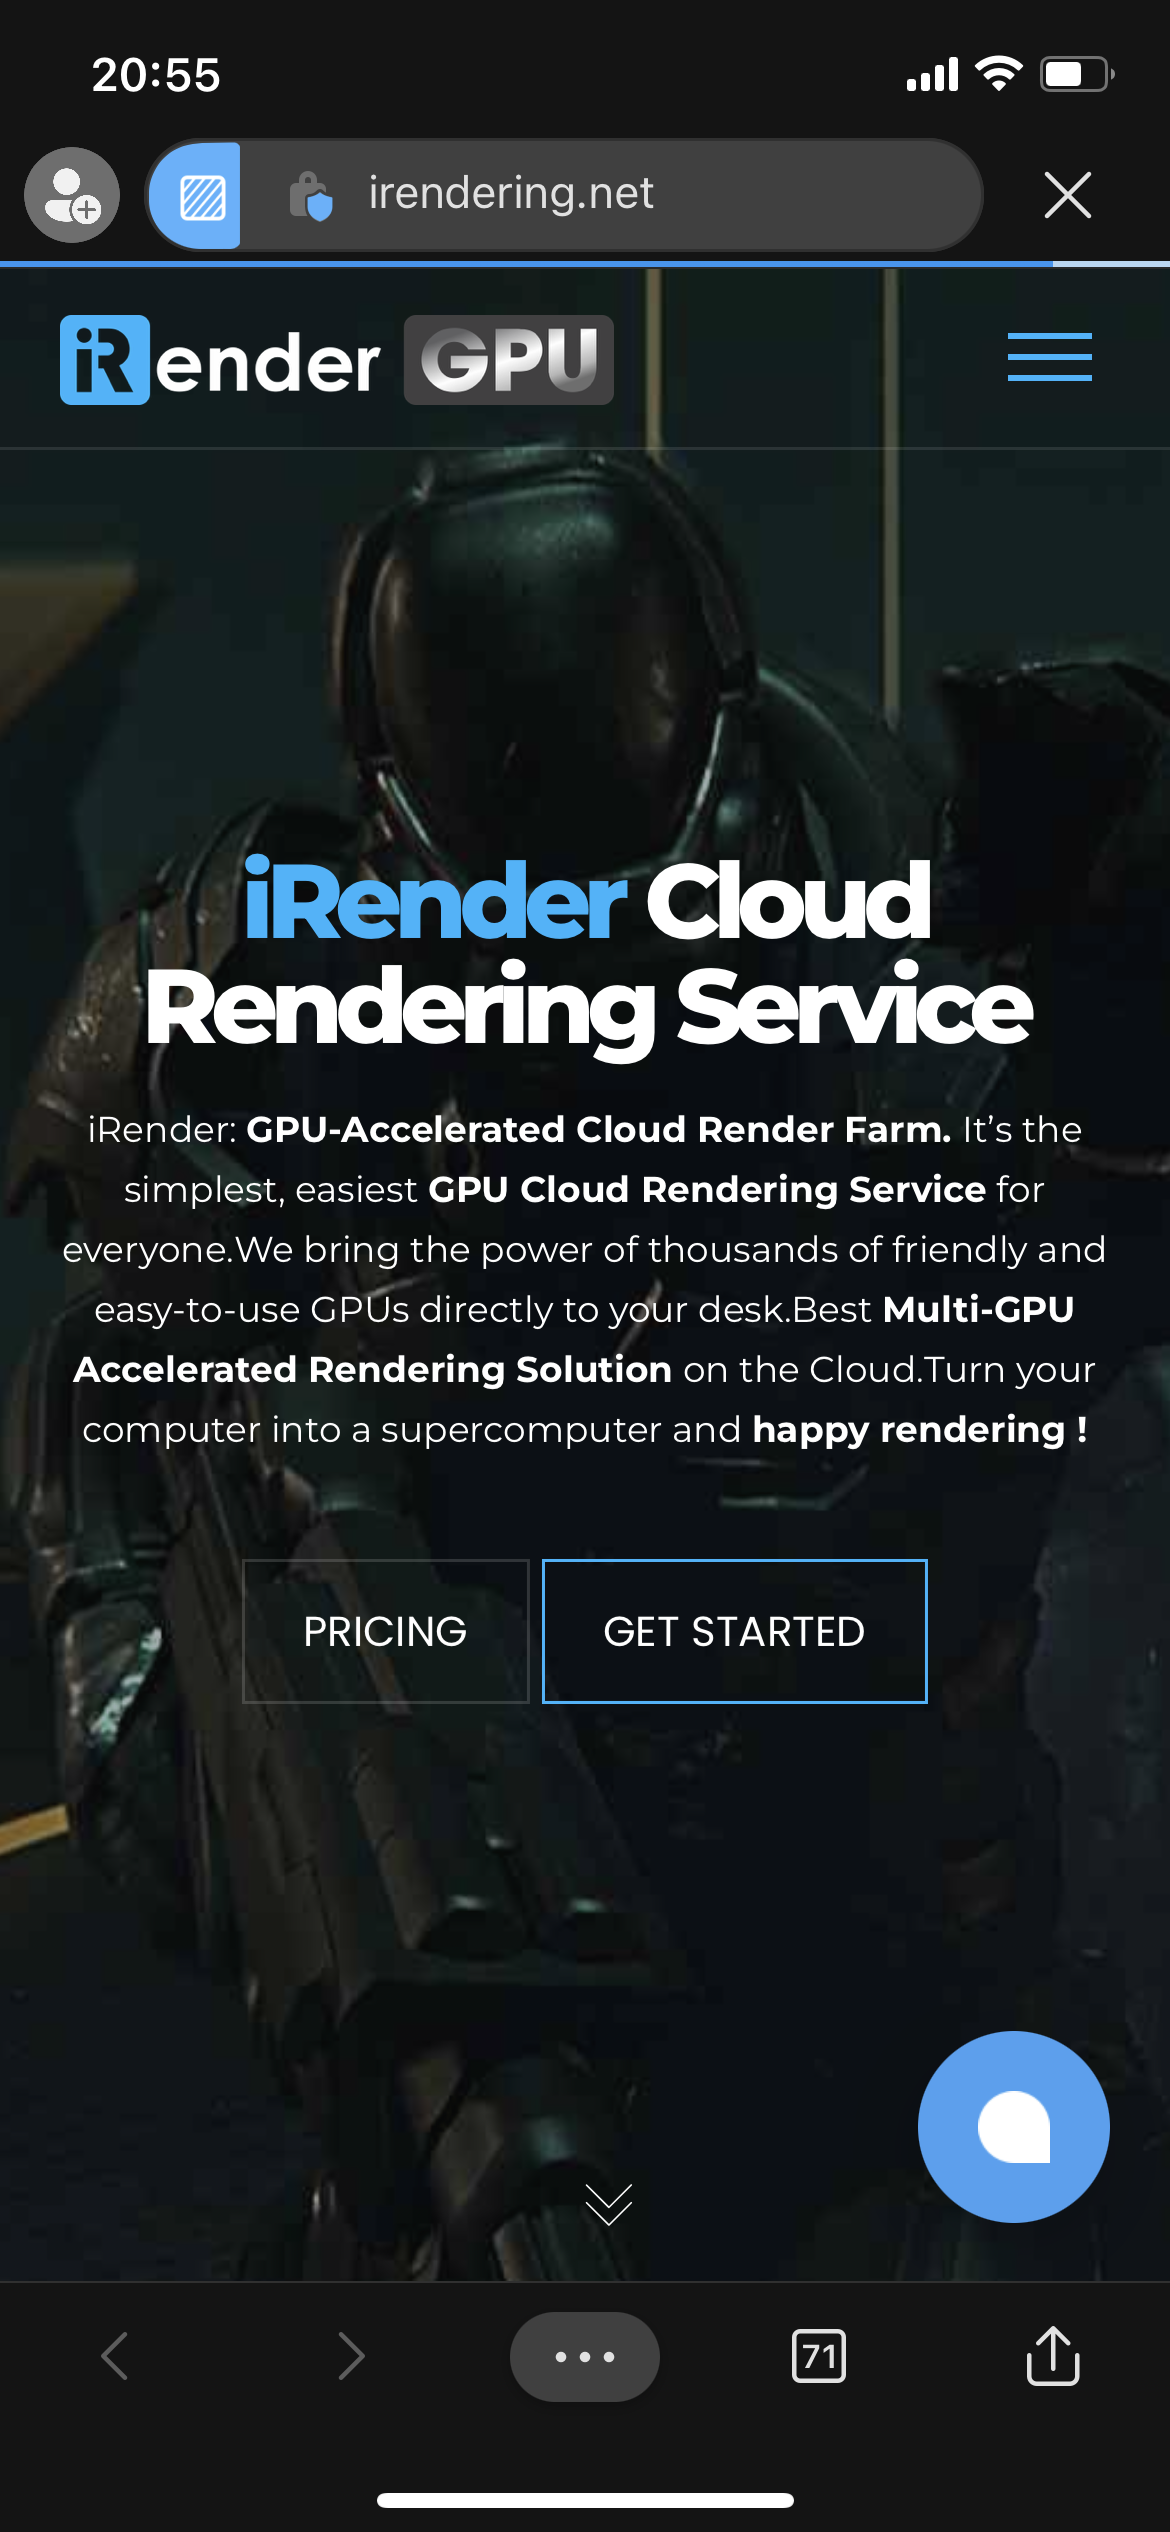 iRender Landing page